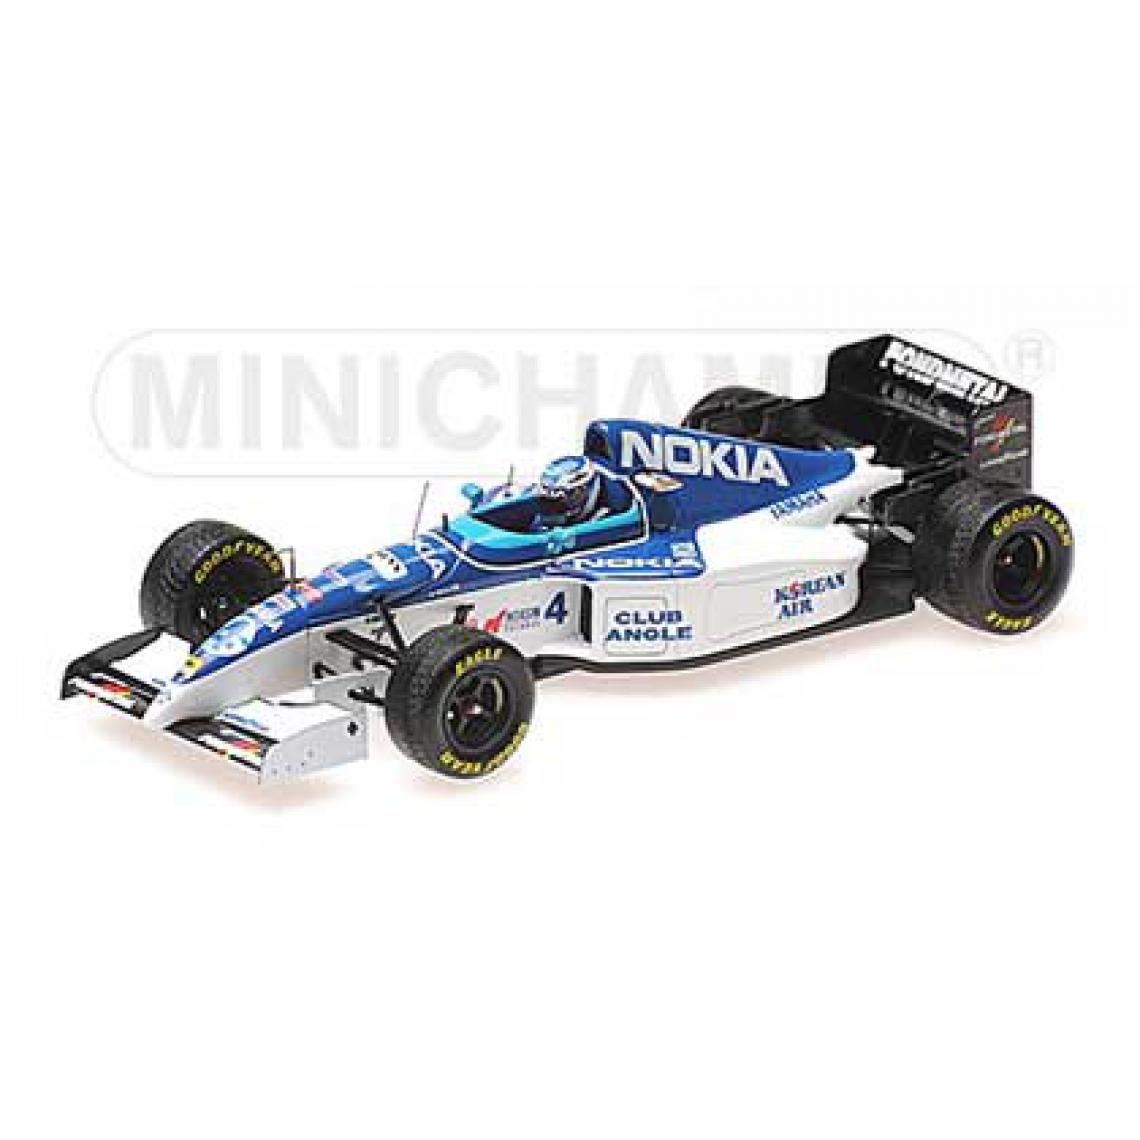 Minichamps - Tyrrell Yamaha 023 1/43 Minichamps - Voitures